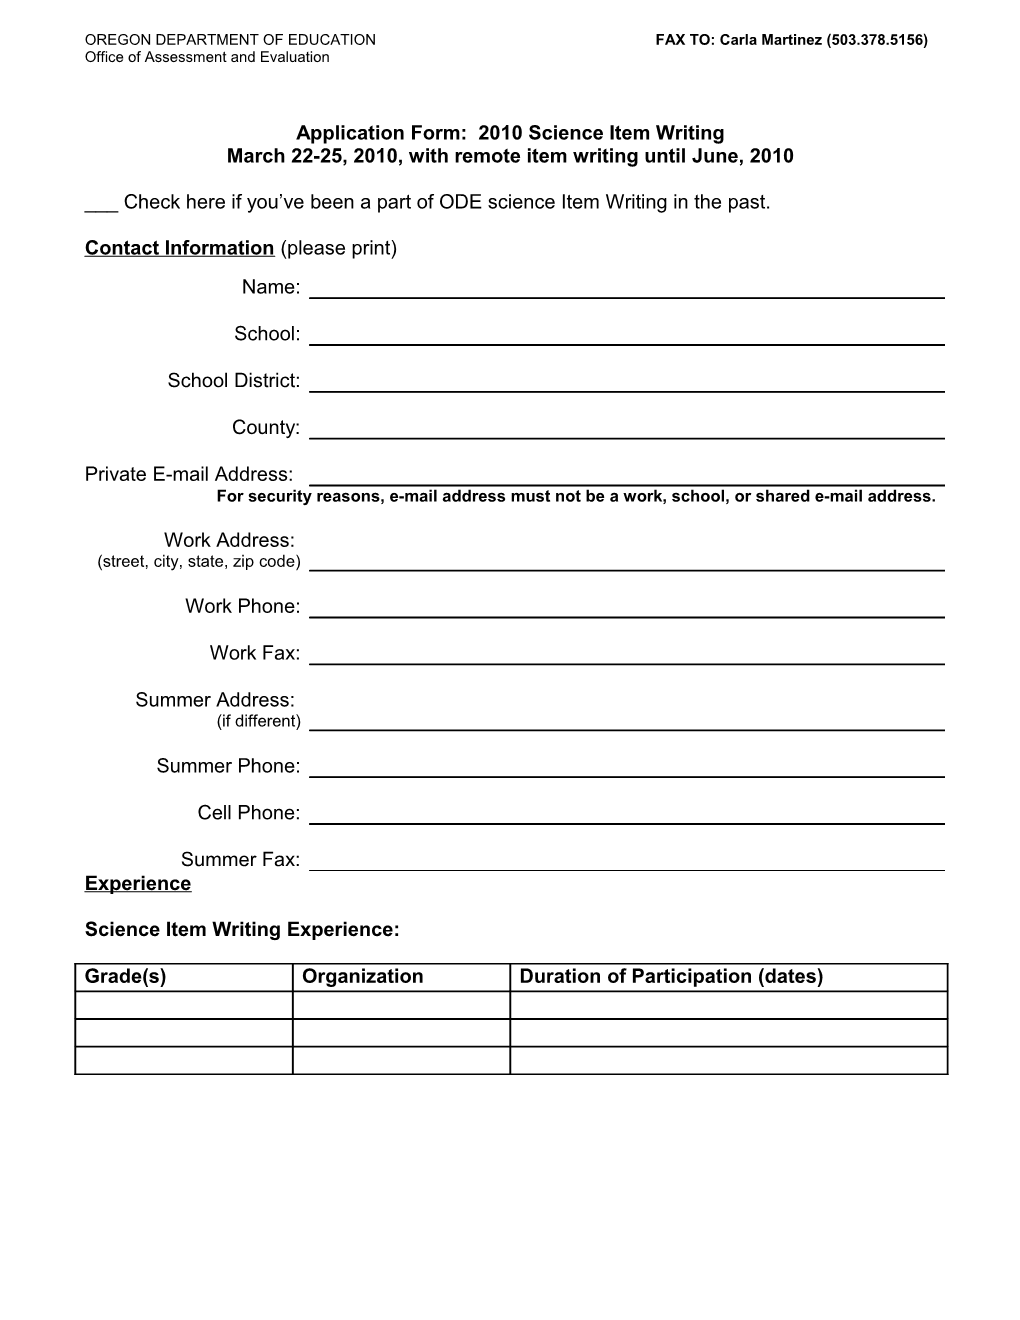 Teacher Application Form For